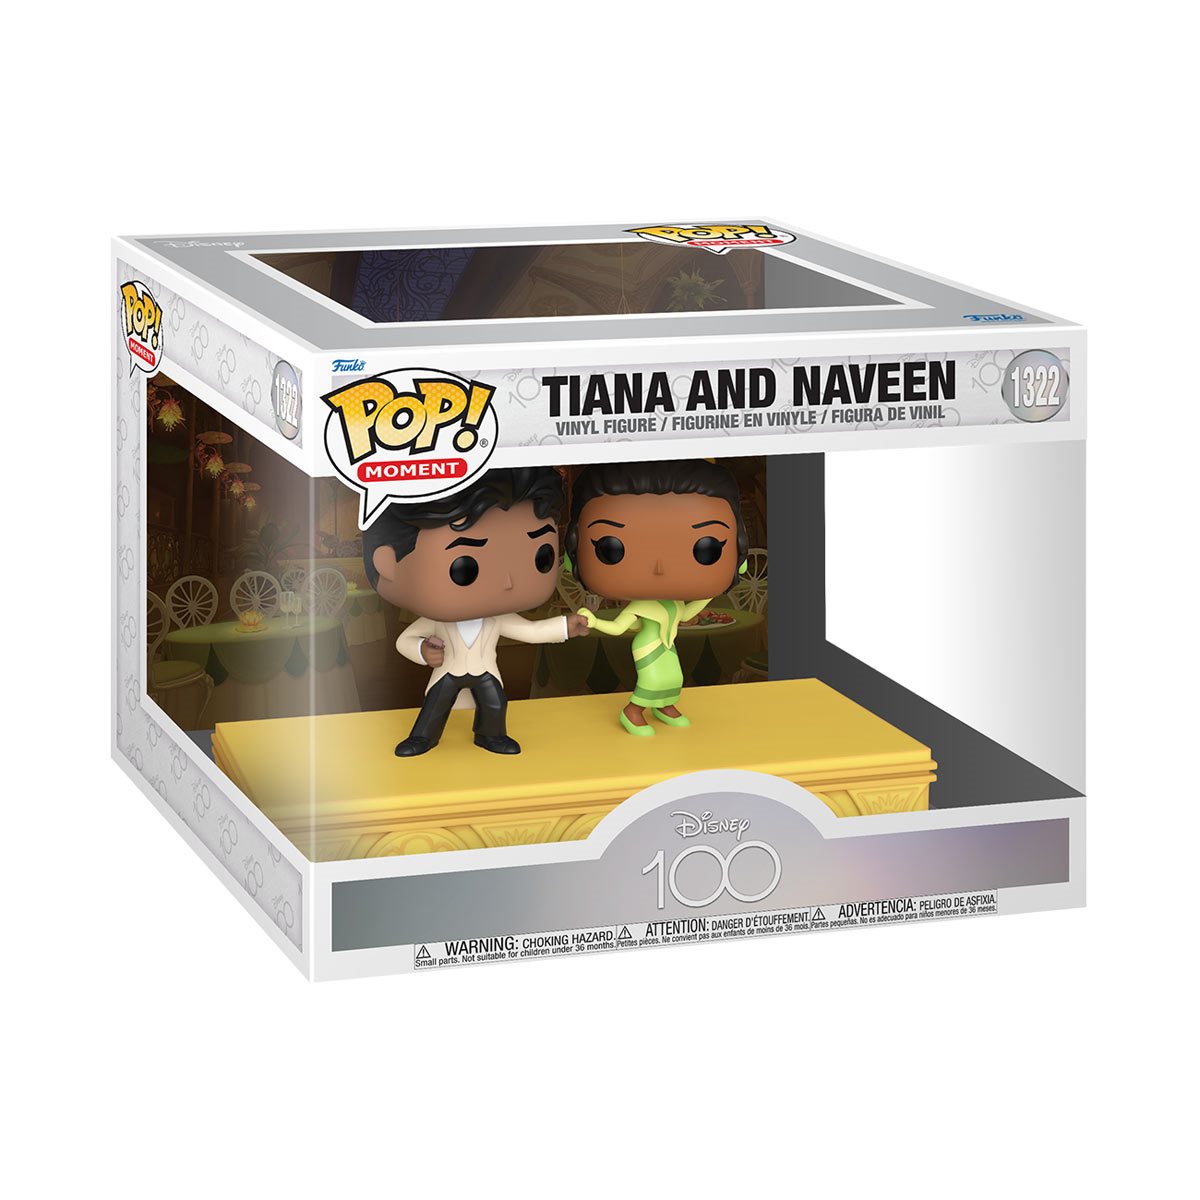 Princesse Tiana et Prince Naveen figurine Disney. Par